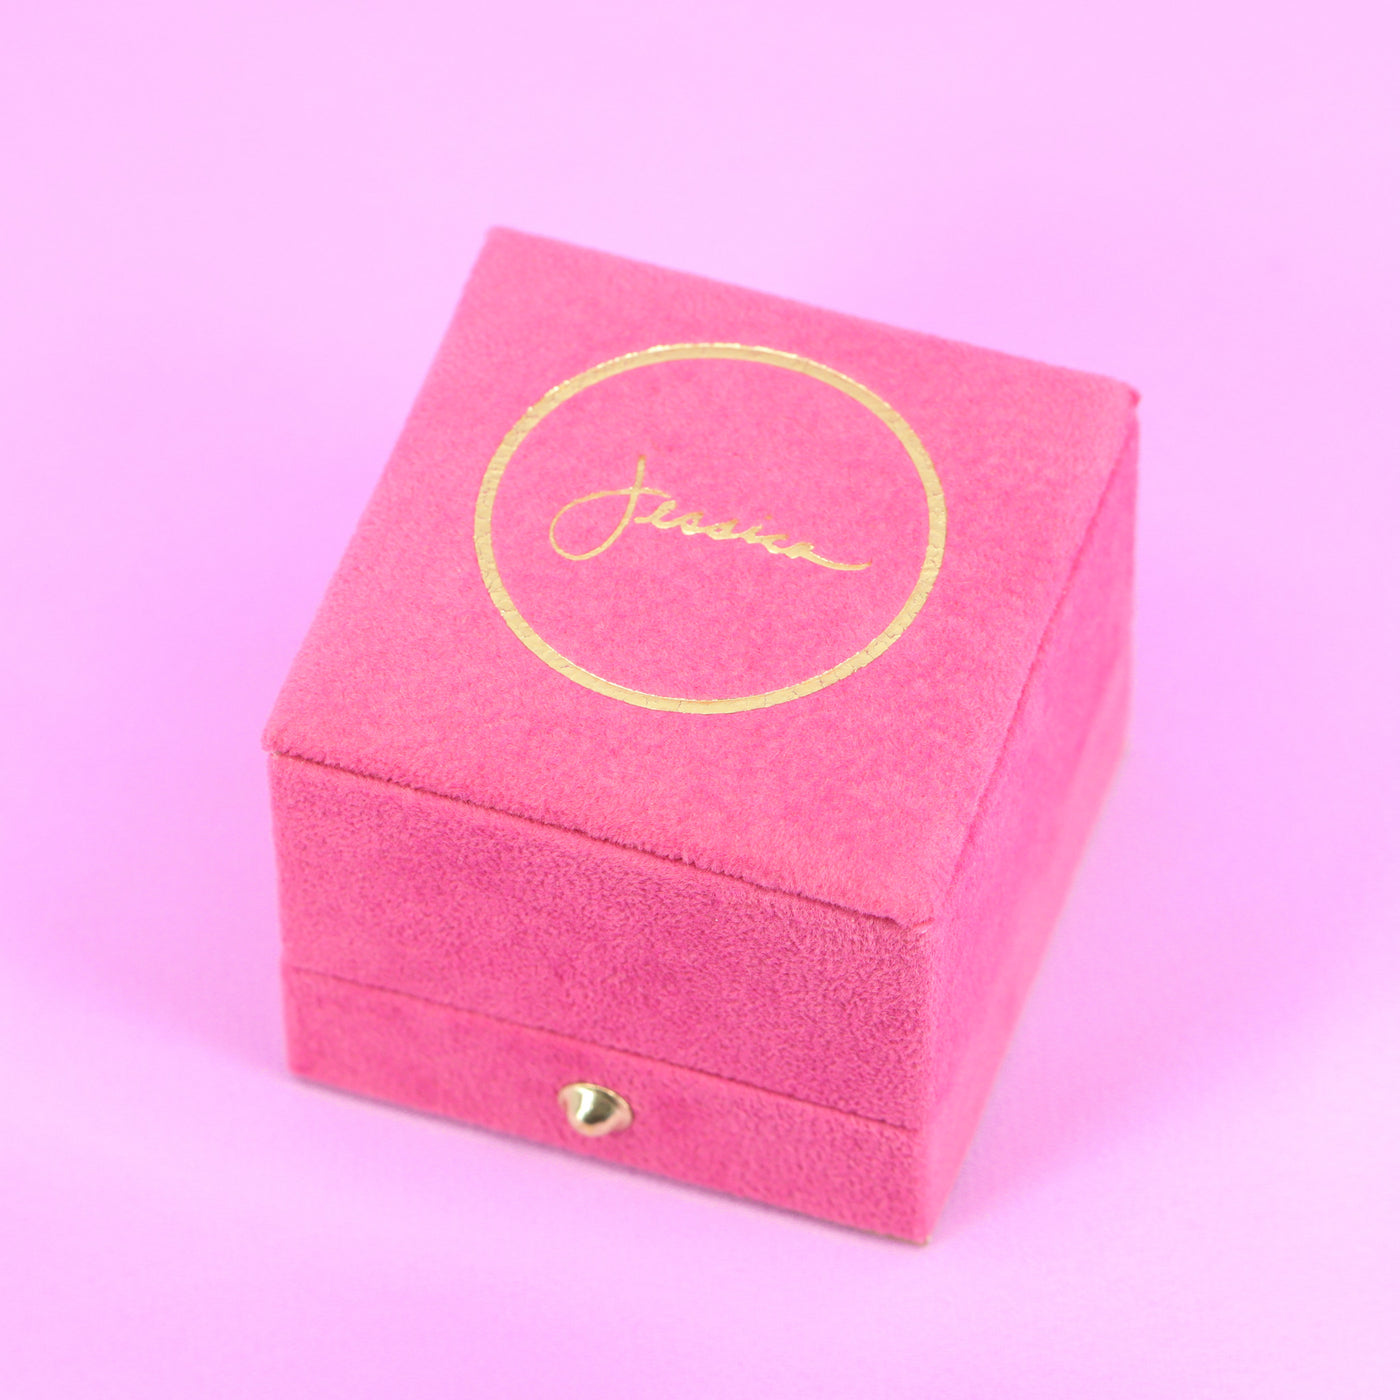 Scarlett - Dopamine by Jessica Flinn - Asscher Cut Pink Sapphire Engagement Ring with Diamond Halo - Custom Made-to-Order Design